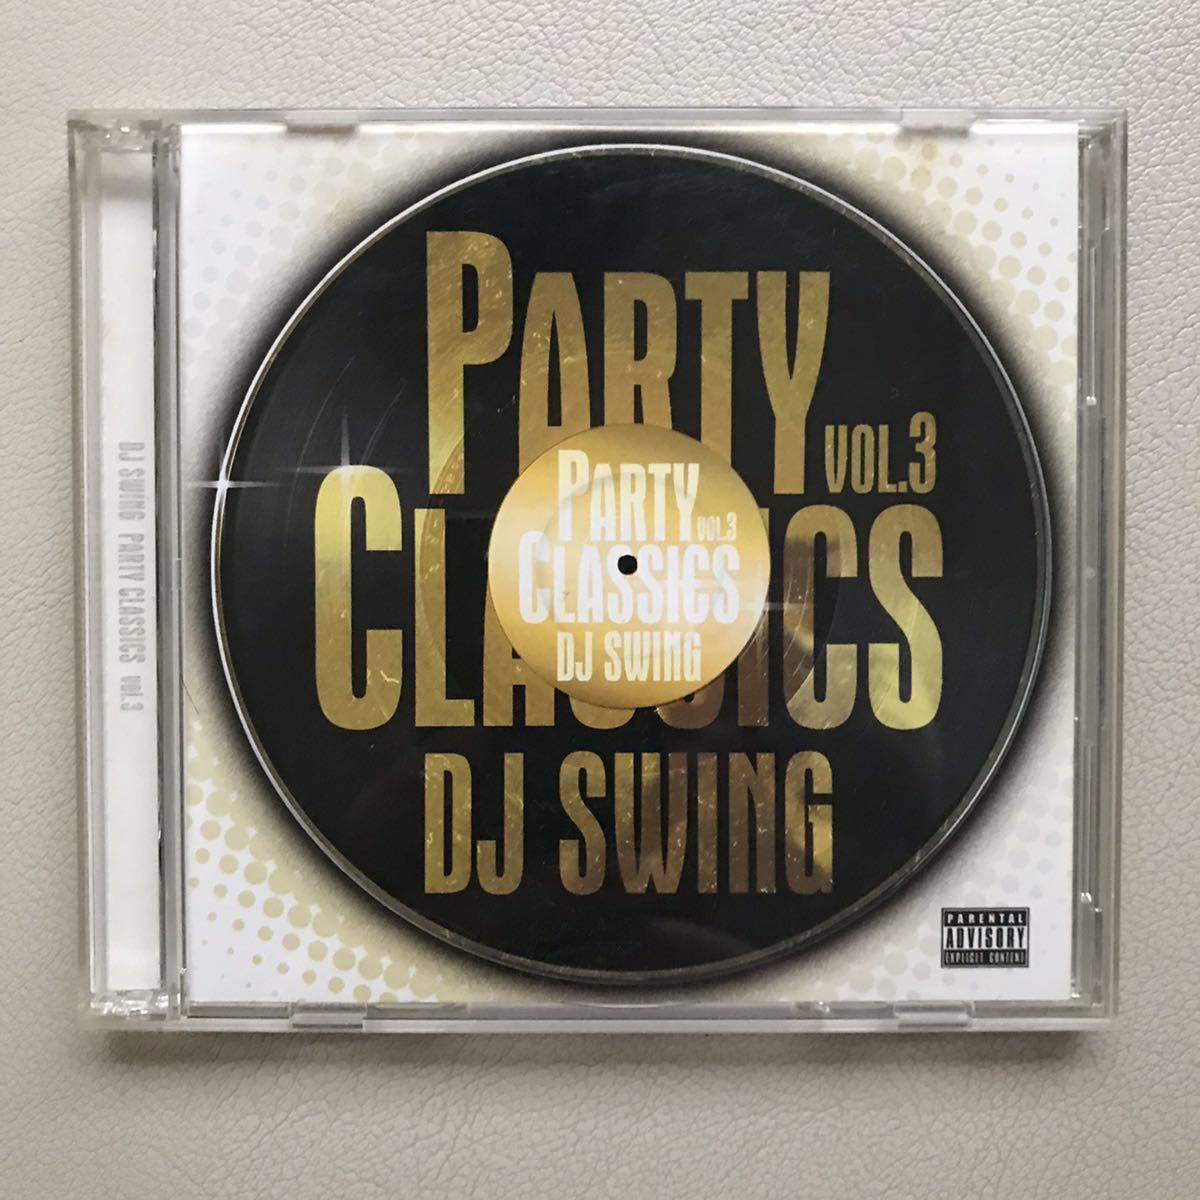 送料無料 / DJ SWING / PARTY CLASSICS VOL3 / ２枚組 / R&B HIPHOP MIX / komori hiroki celory shu-g koco kiyo